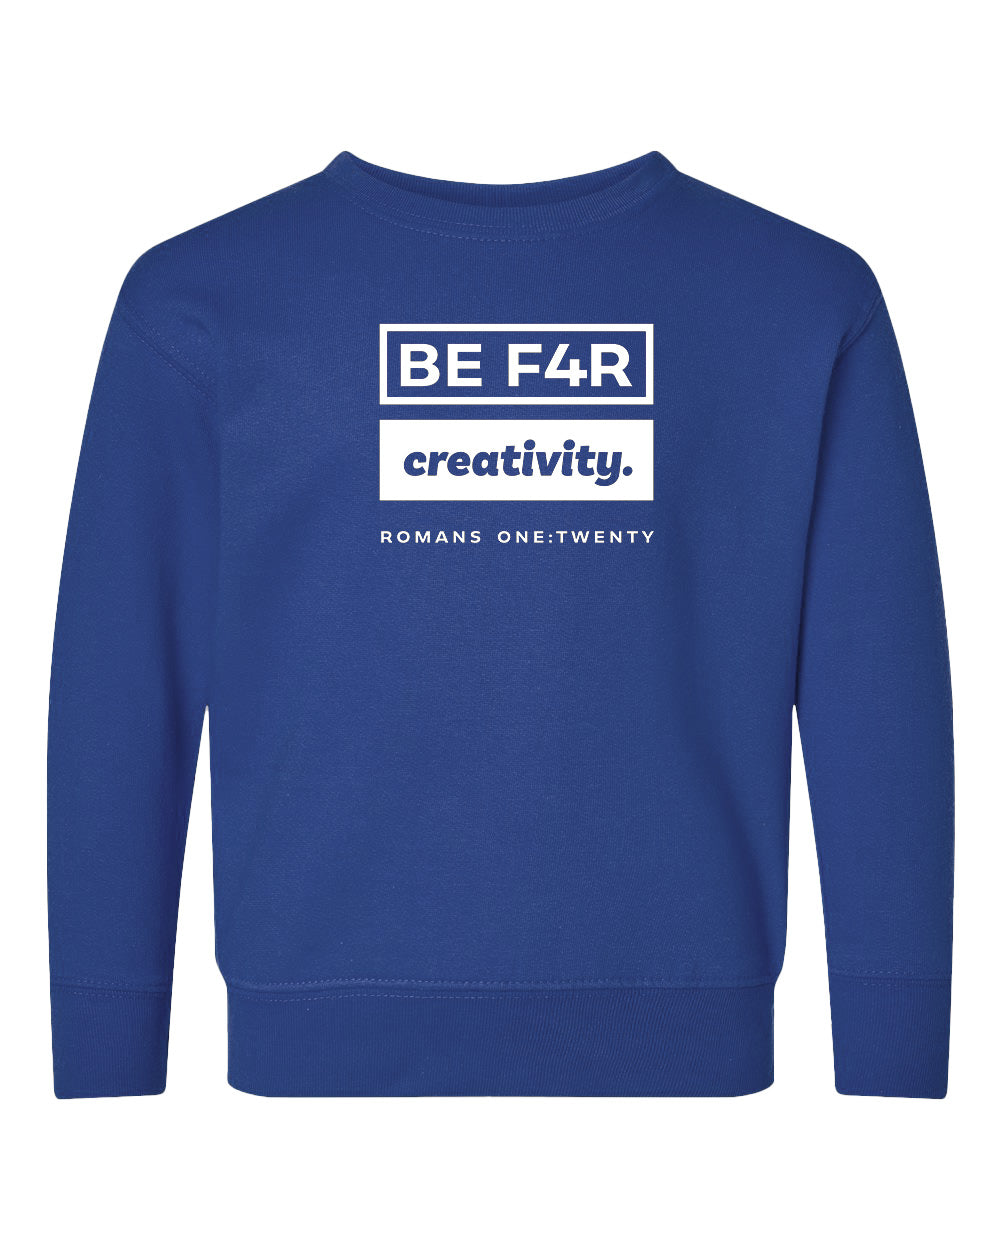 BE F4R Creativity 2 Toddler Crewneck